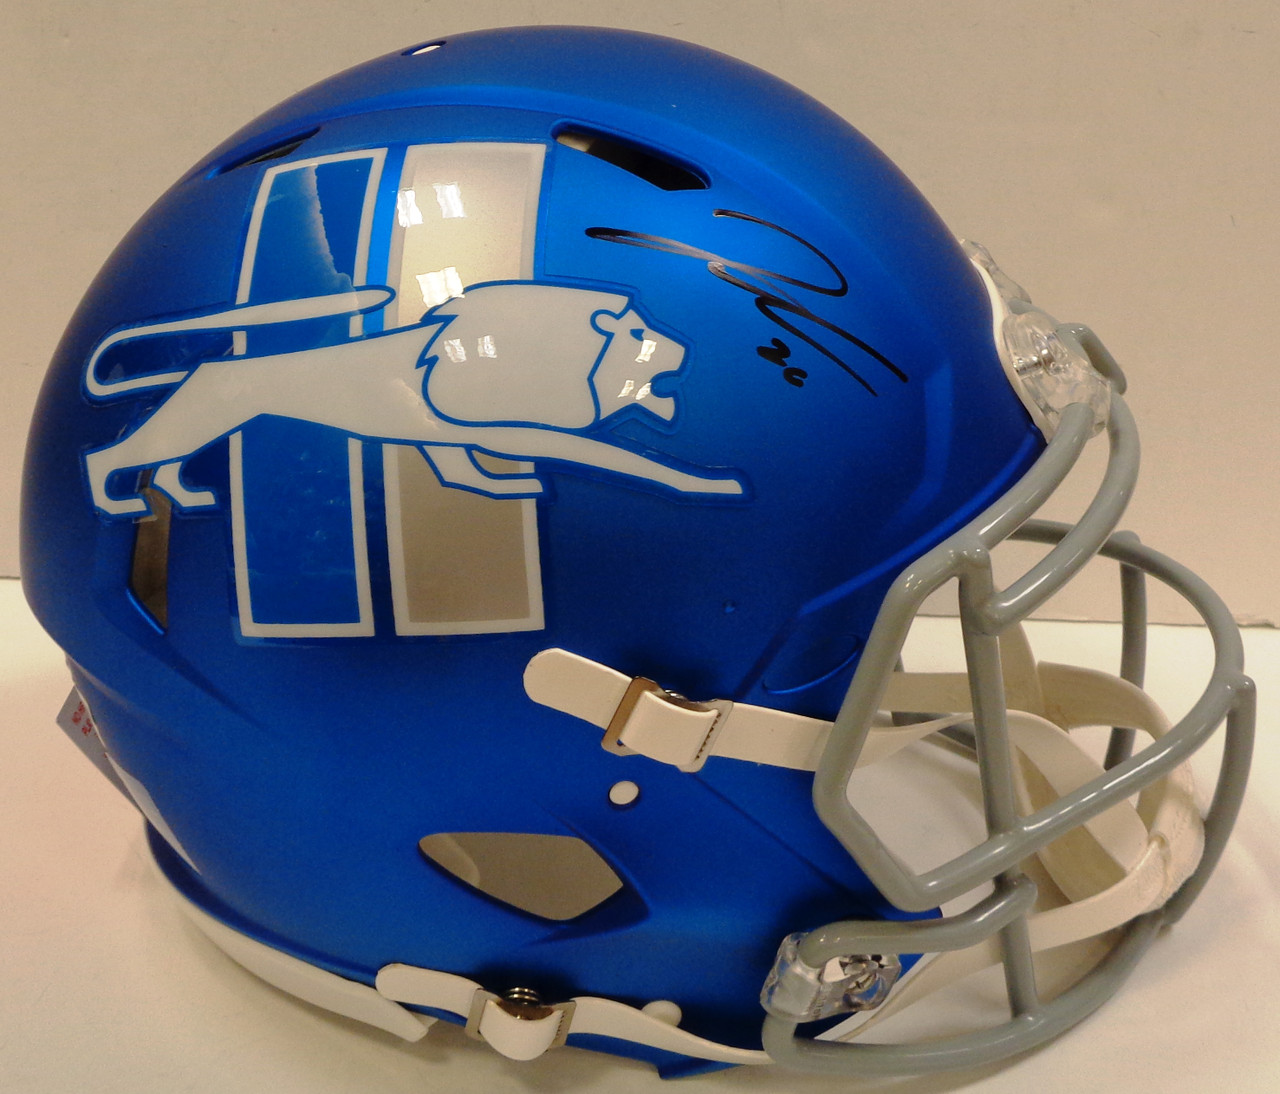 Lions New Alternate Helmets Are Something